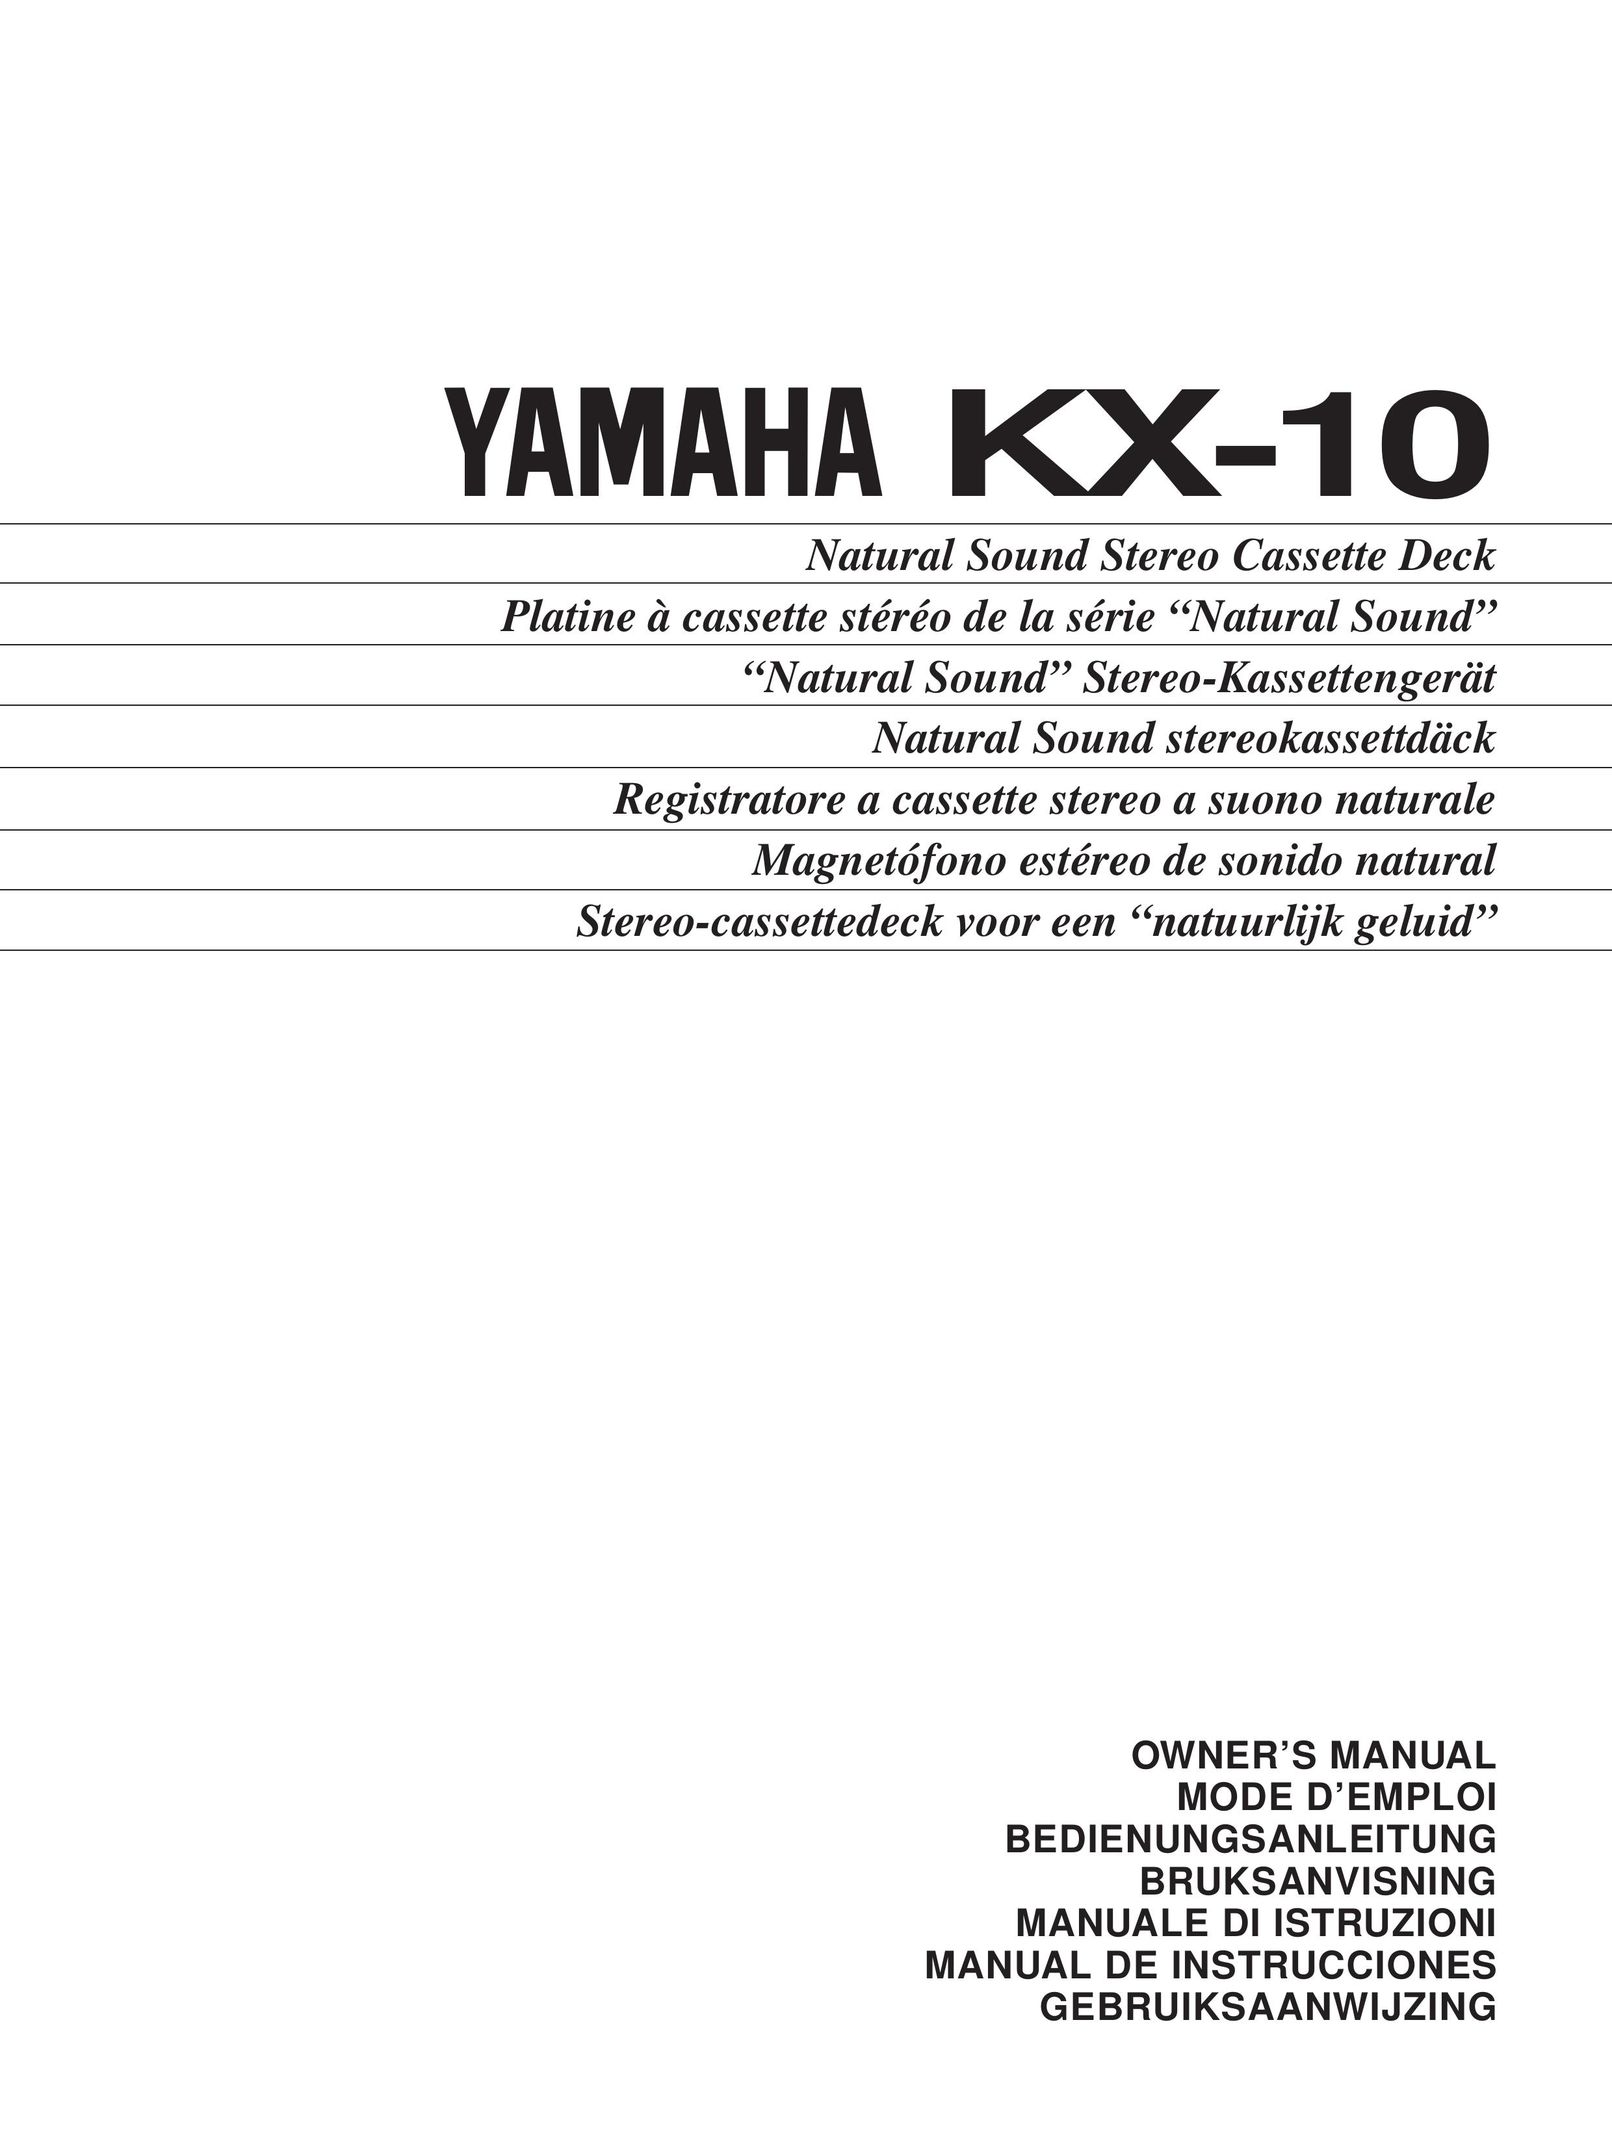 Yamaha KX-10 Cassette Player User Manual